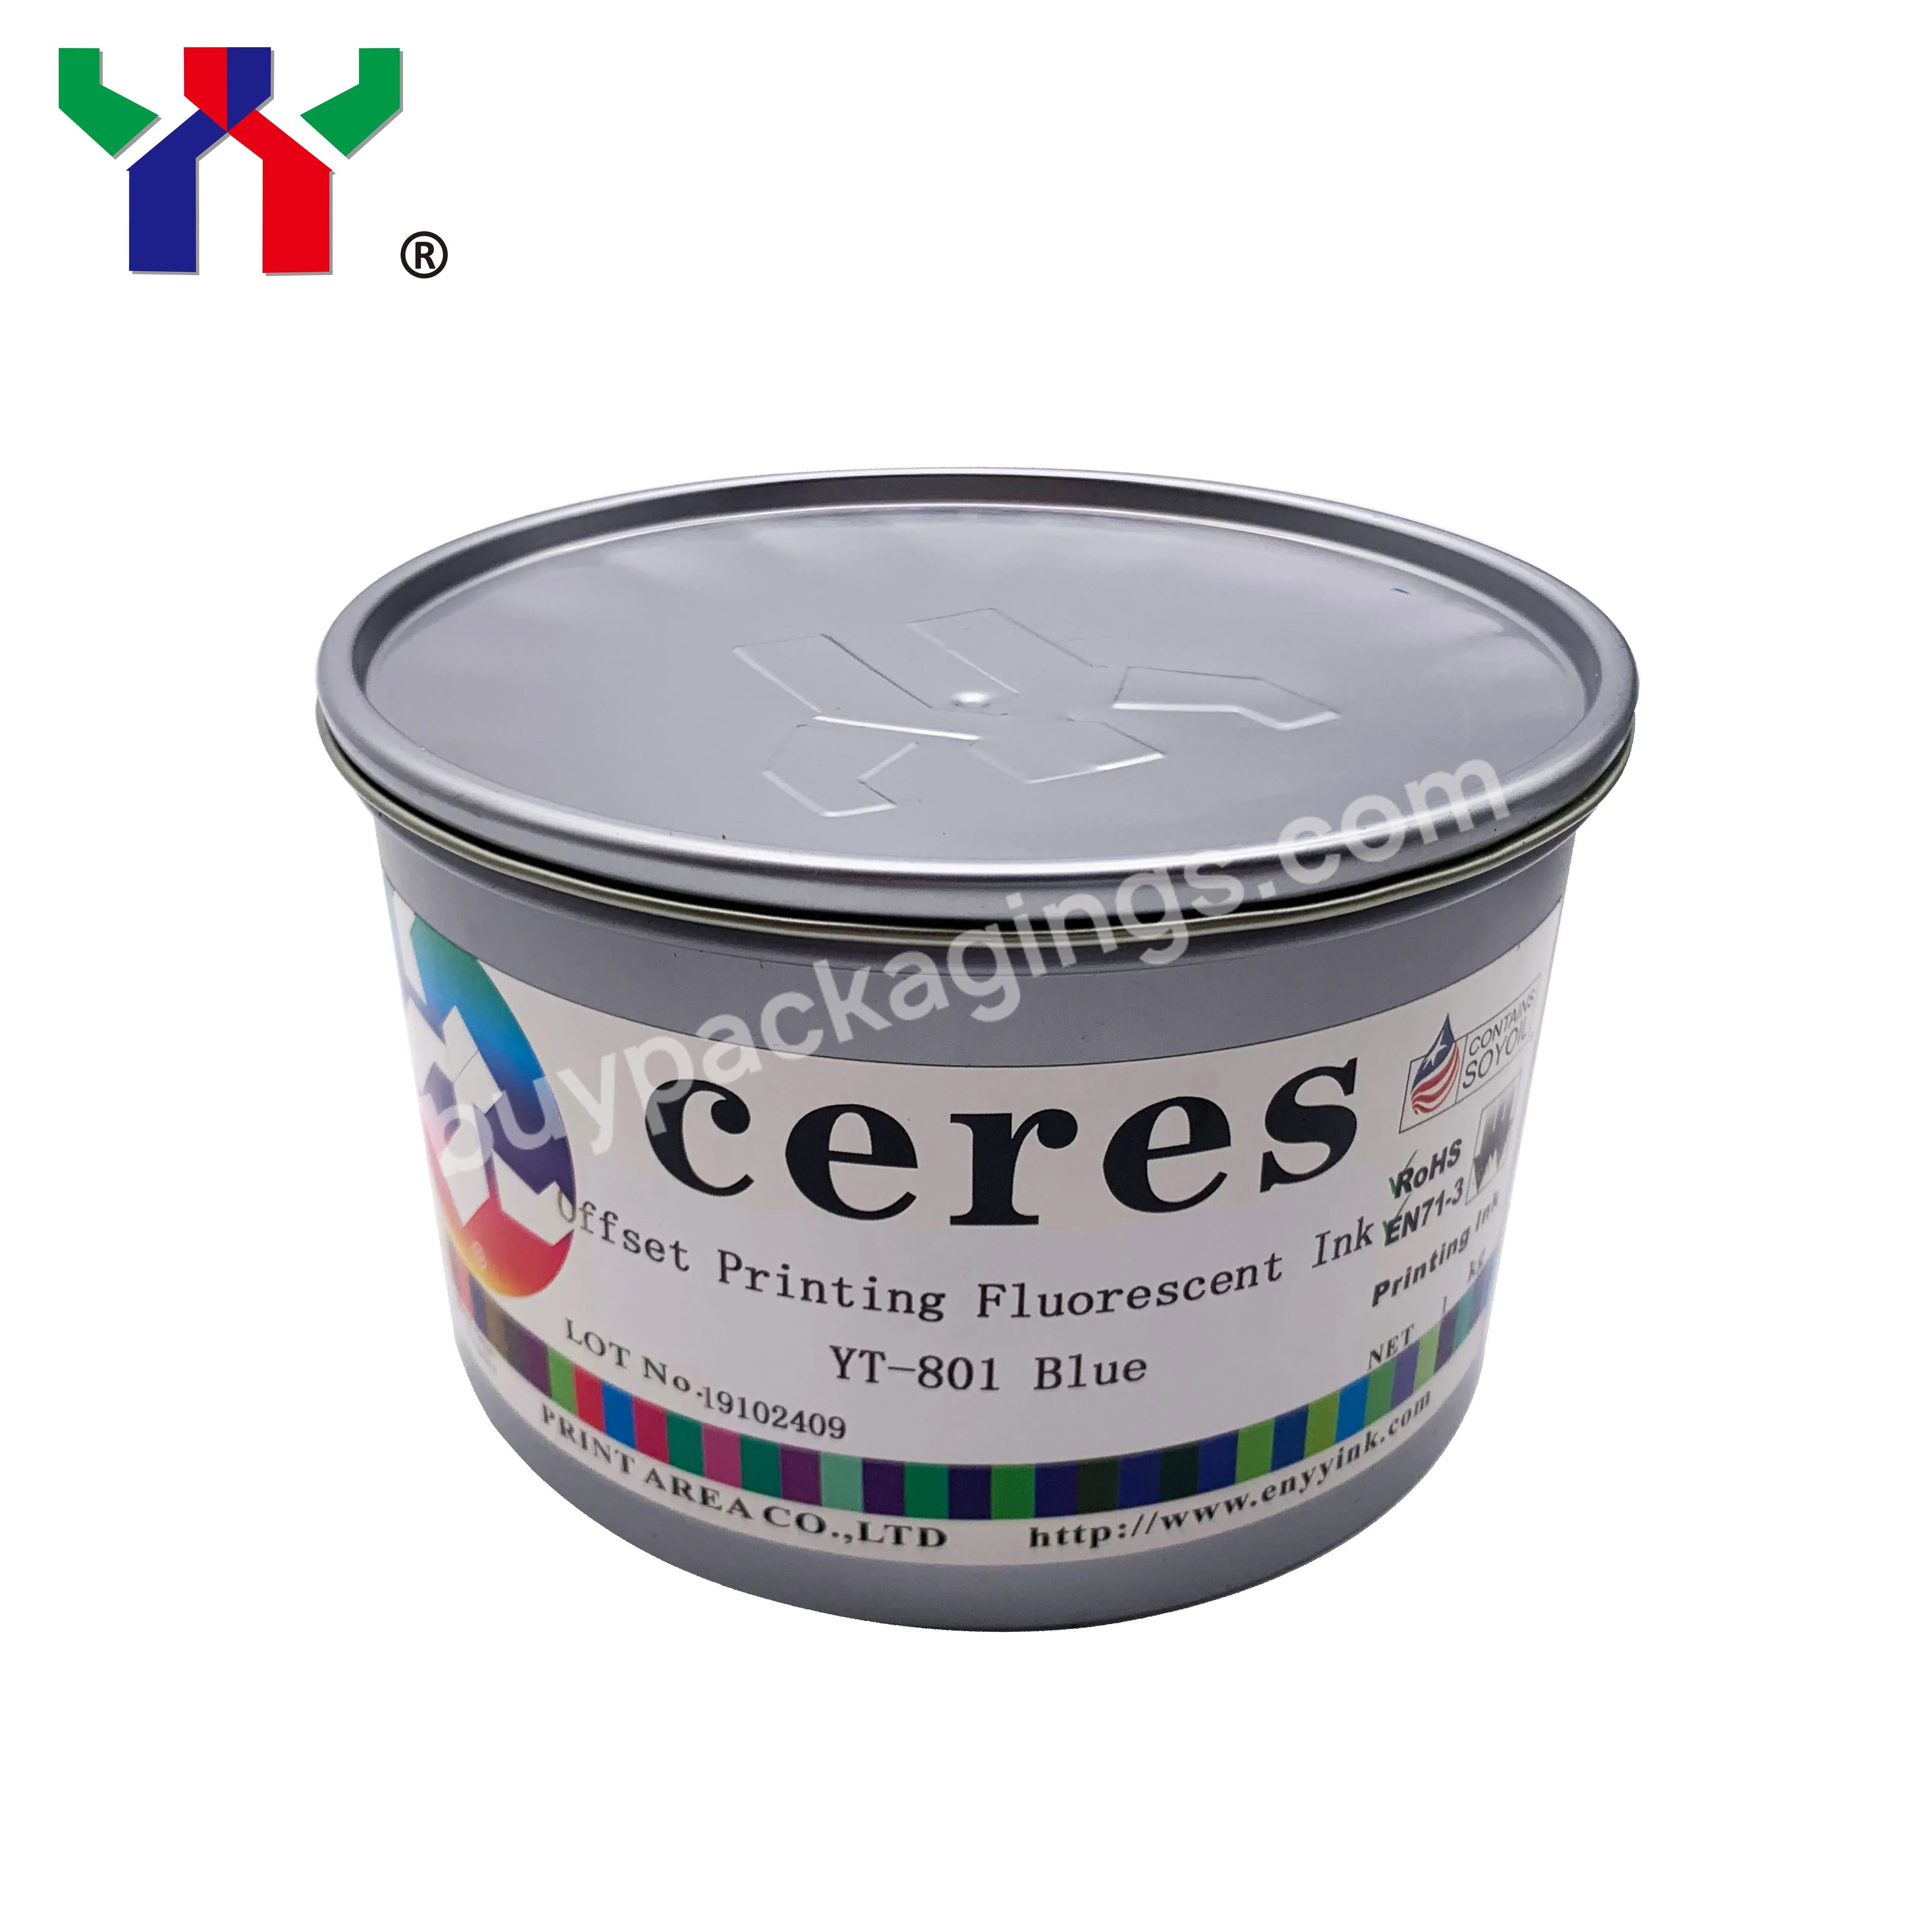 Ceres Uv Offset Printing Fluorescent Ink,Uv Dry - Yt-801 Blue,1 Kg/can - Buy Fluorescent Ink,Pantone Ink,Uv Offset Printing Ink.